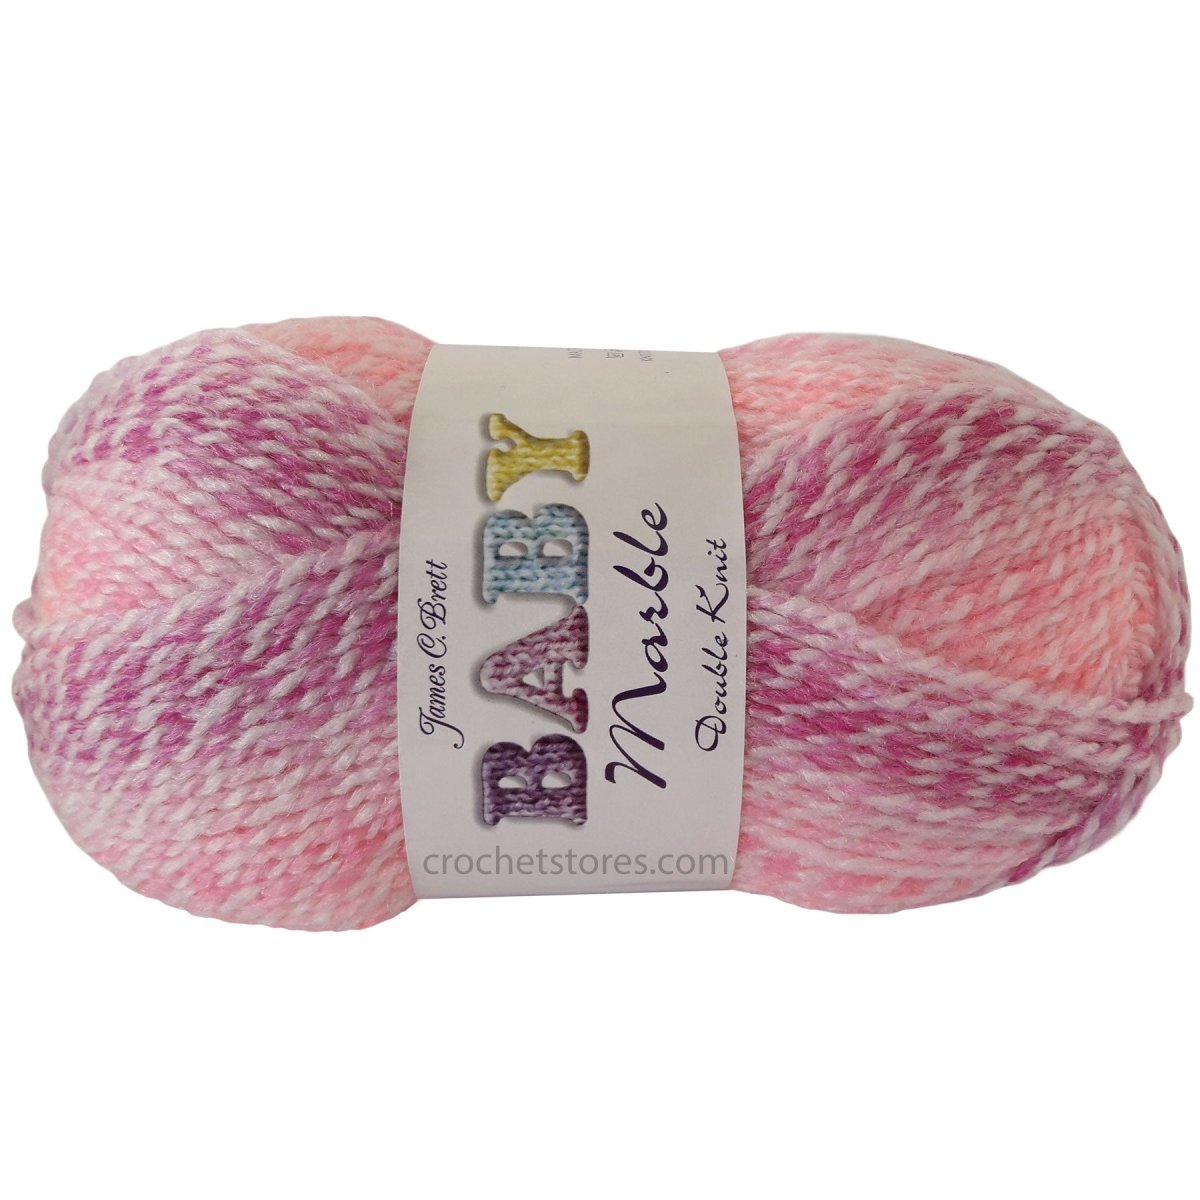 BABY MARBLE DK - CrochetstoresBM15060019097007